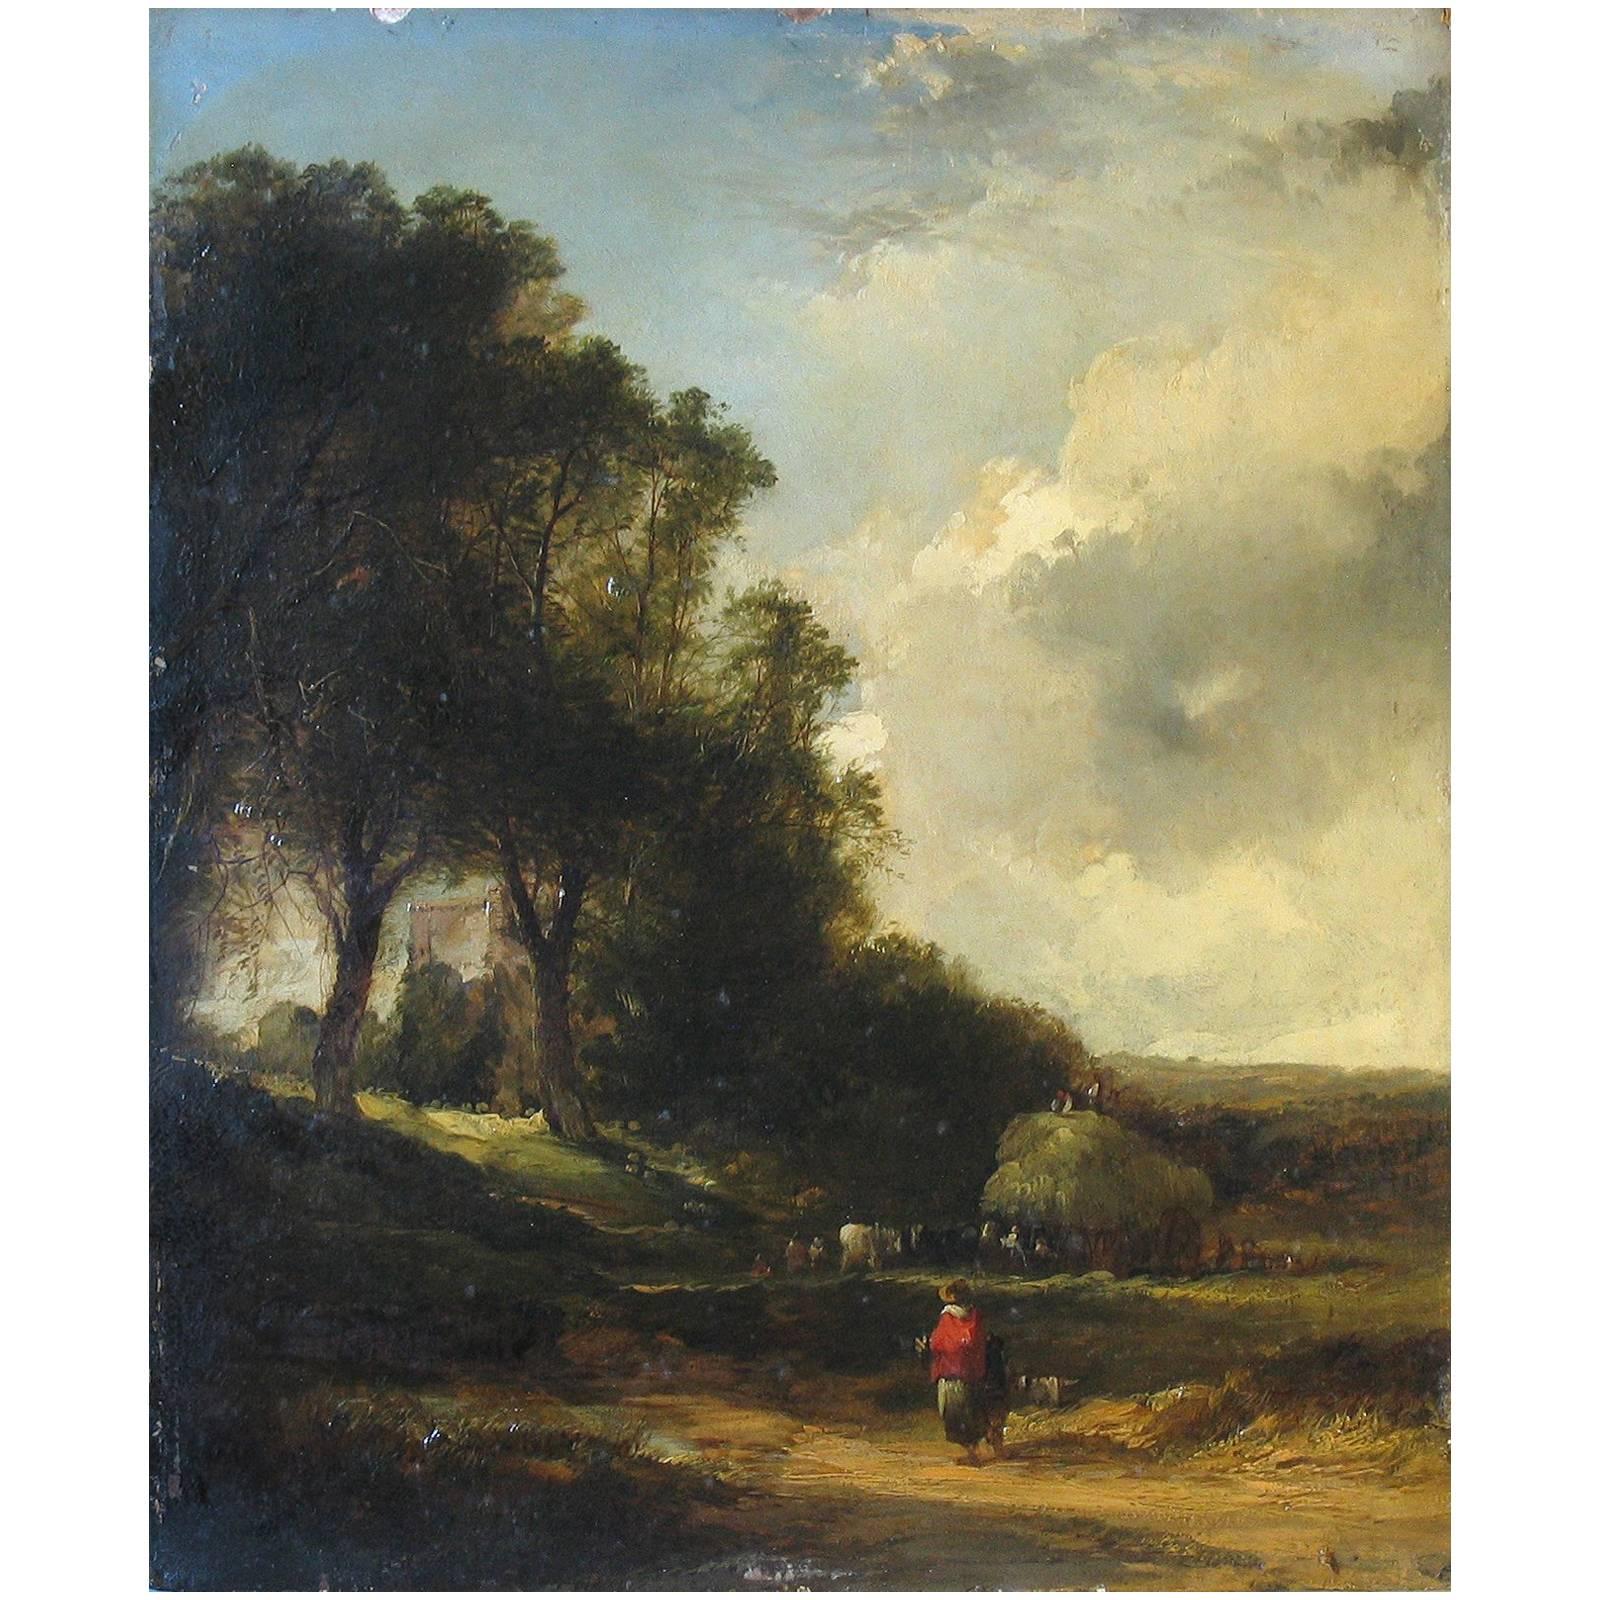 Attributed to Richard Parkes Bonington, Oil on Millboard, Landscape